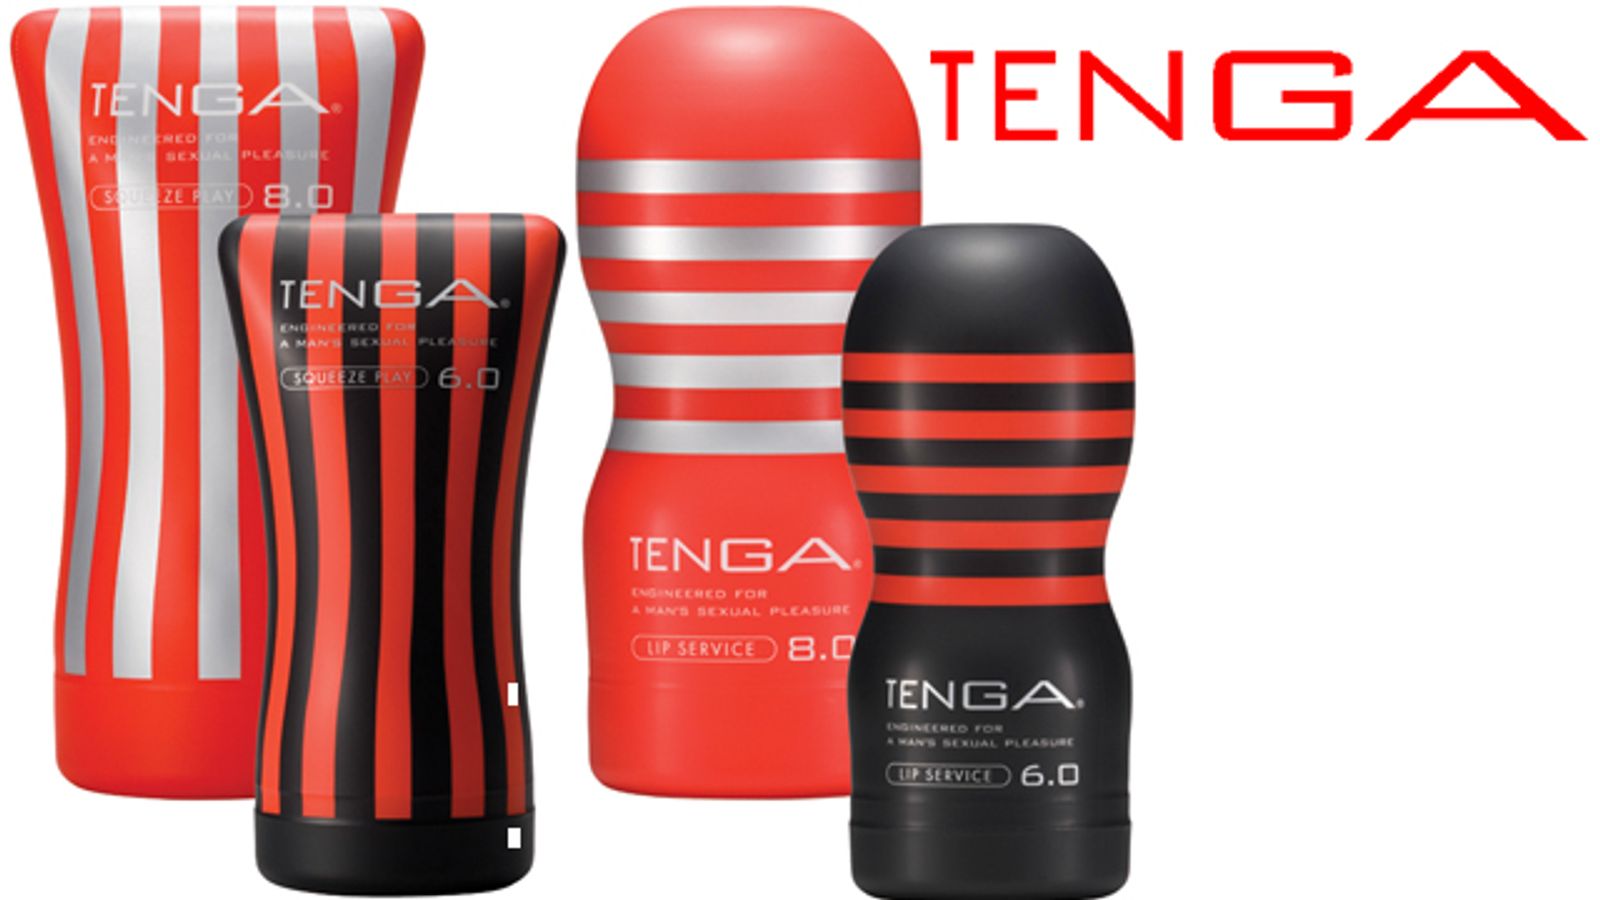 Tenga Designed for Discreet, Convenient Use